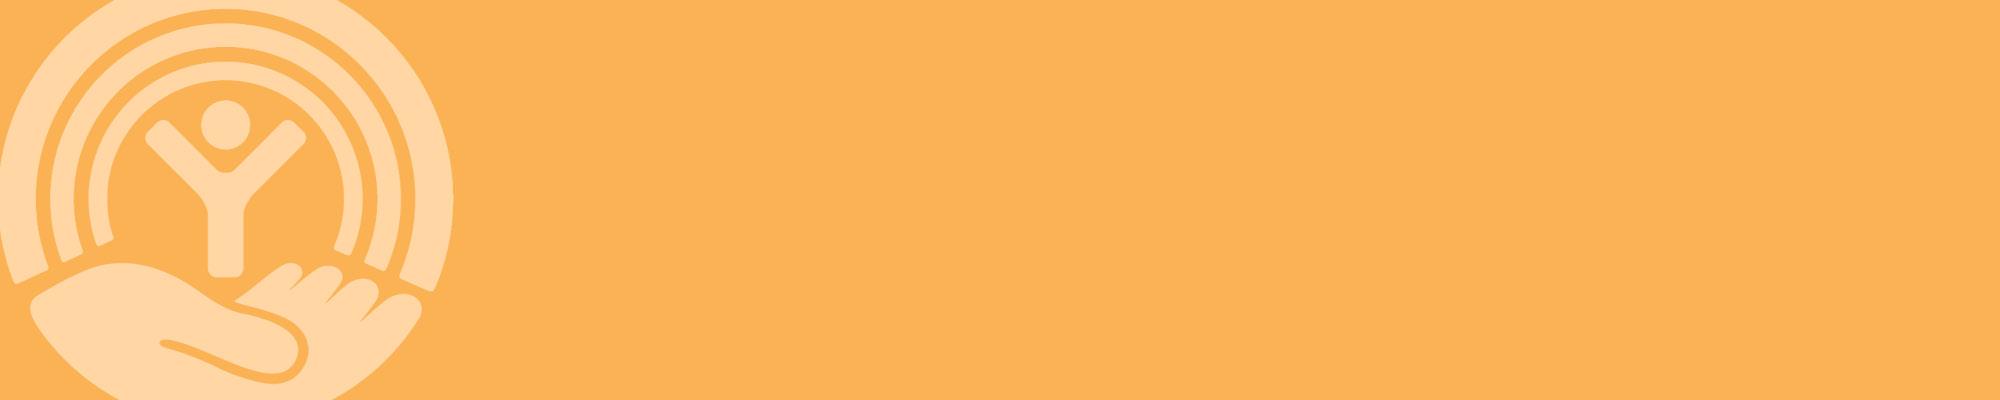 orange backdrop with white UW logo